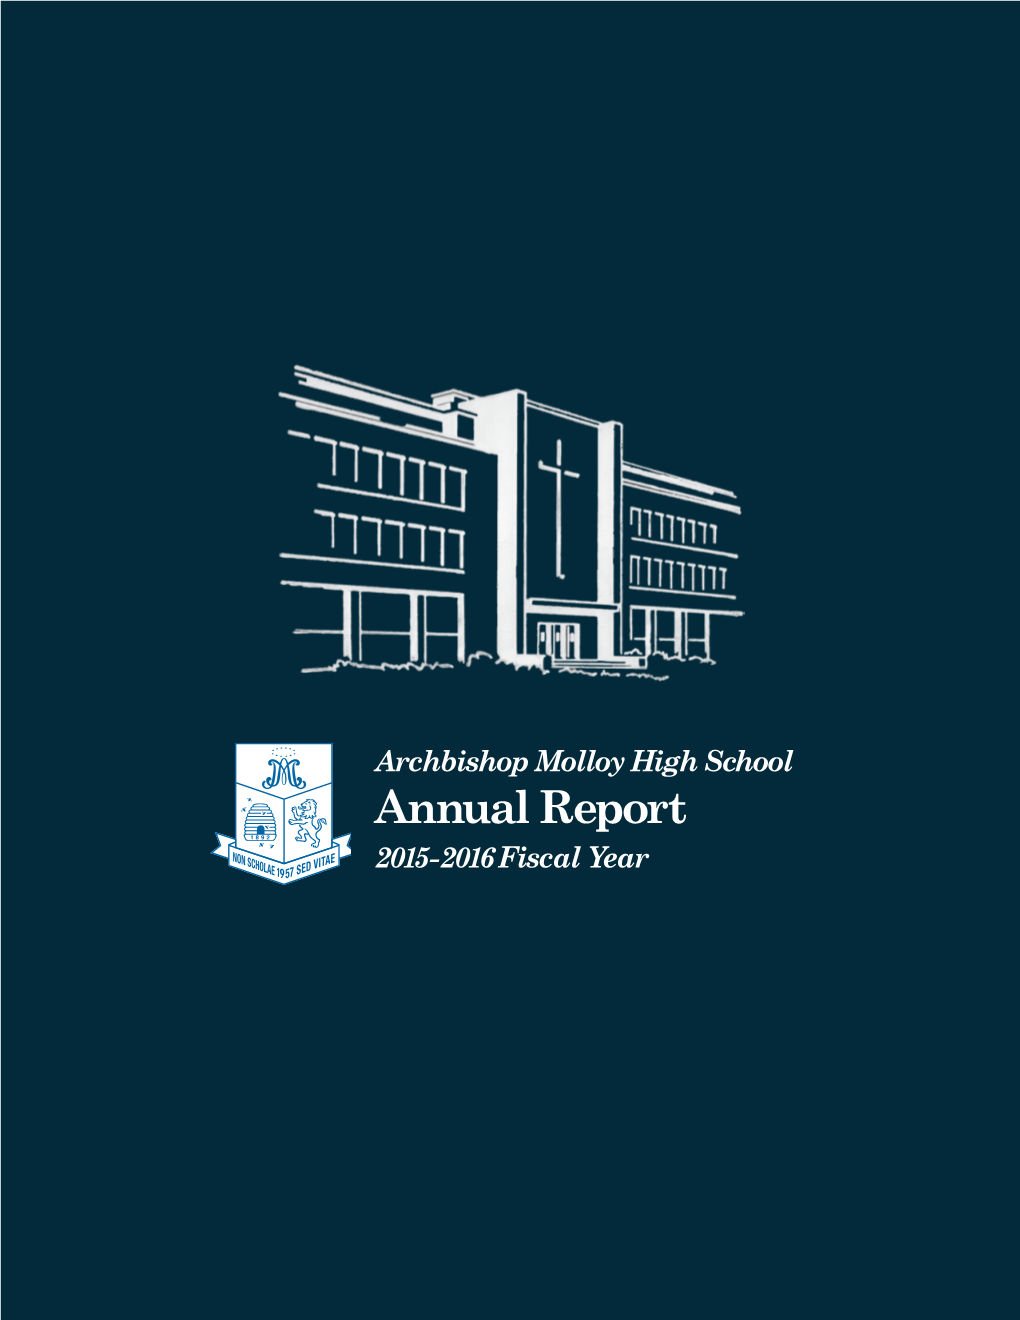 Archbishop Molloy High School Annual Report 2015-2016 Fiscal Year